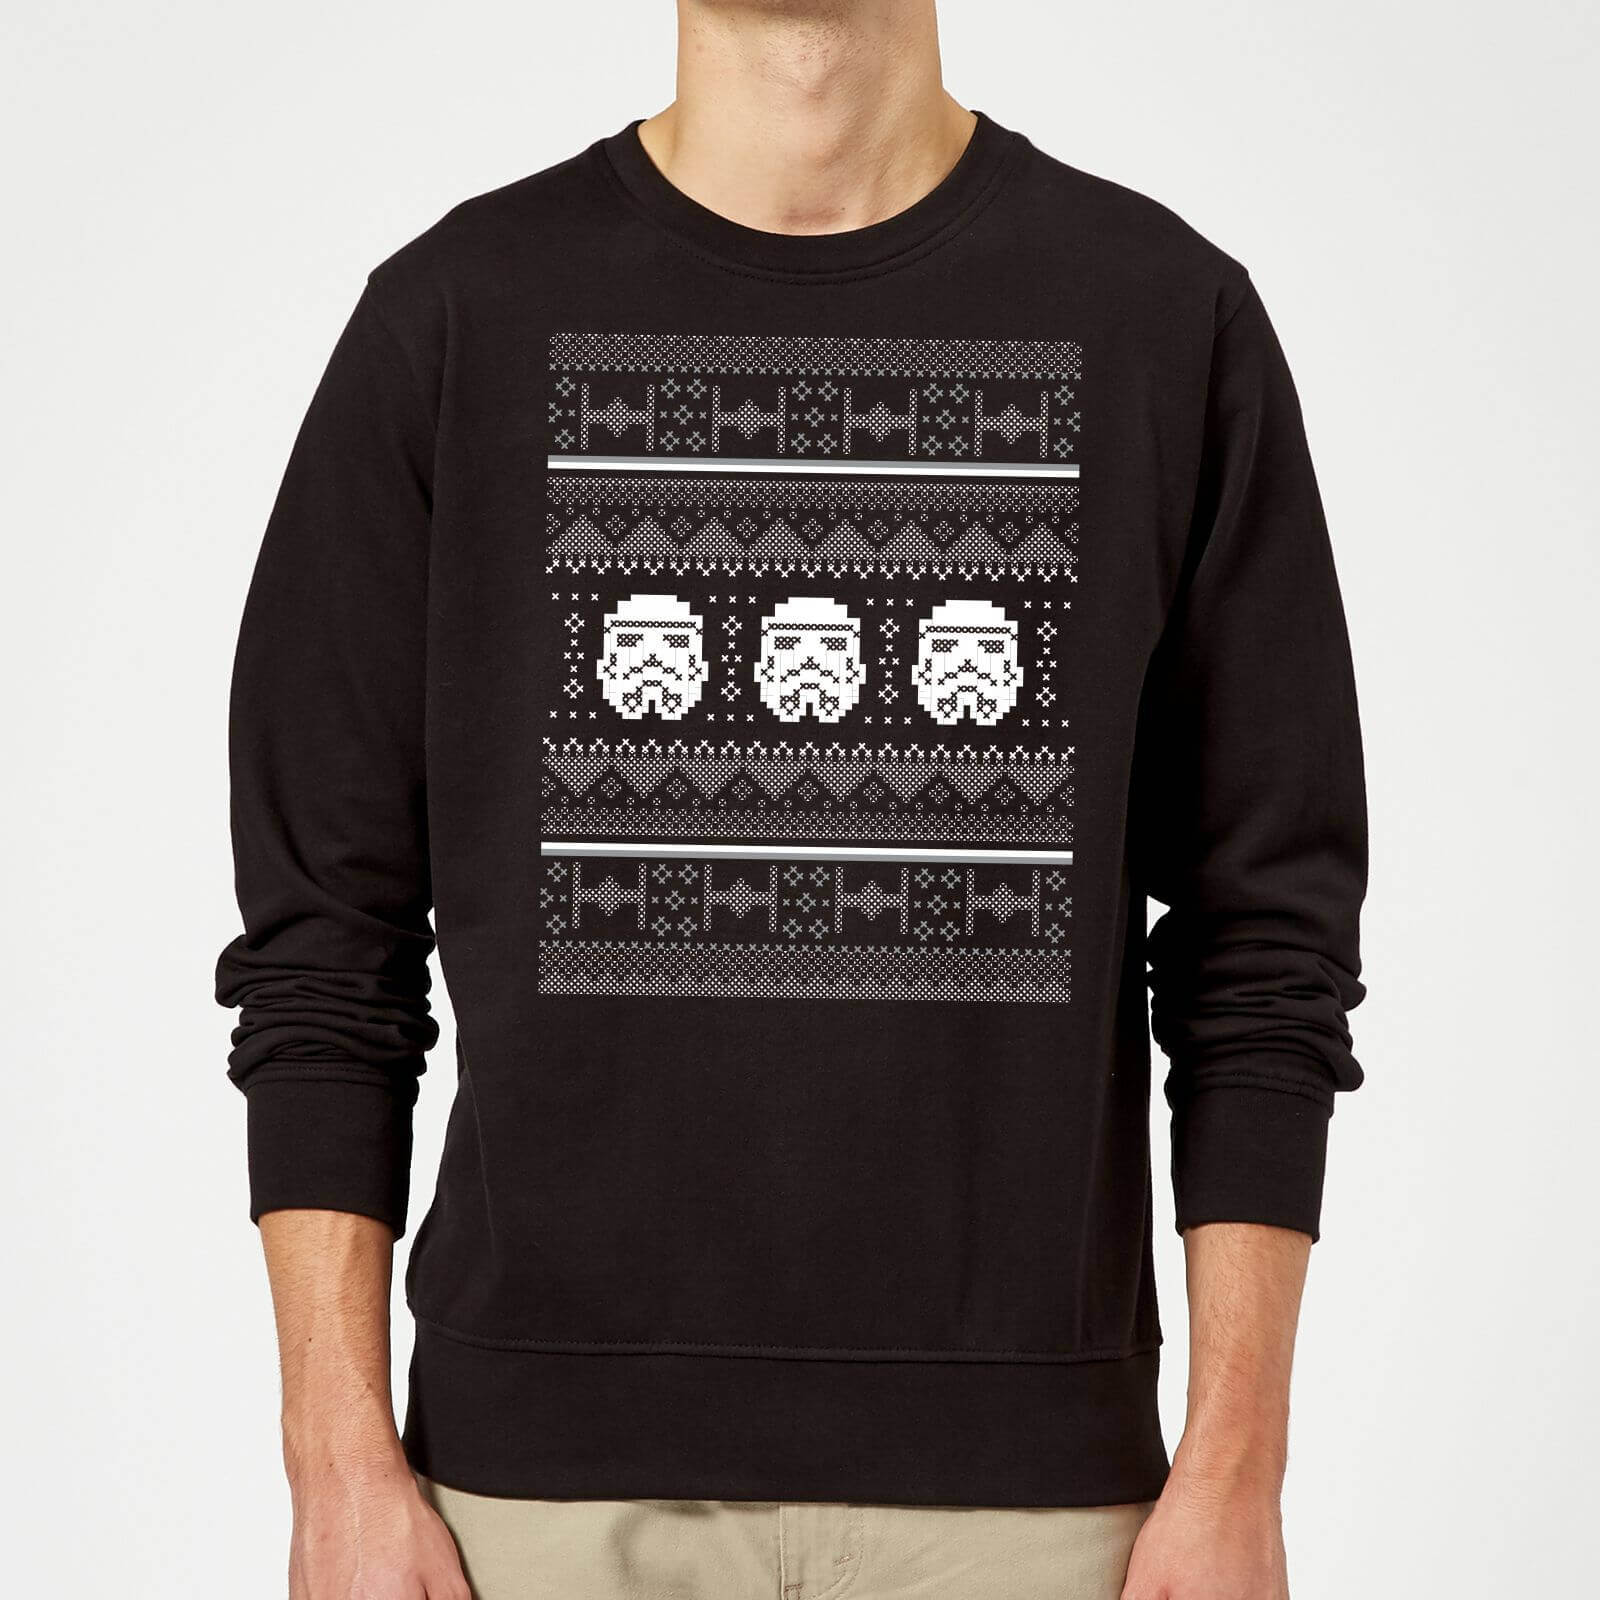 Star Wars Christmas Stormtrooper Knit Black Christmas Sweatshirt - M - Black